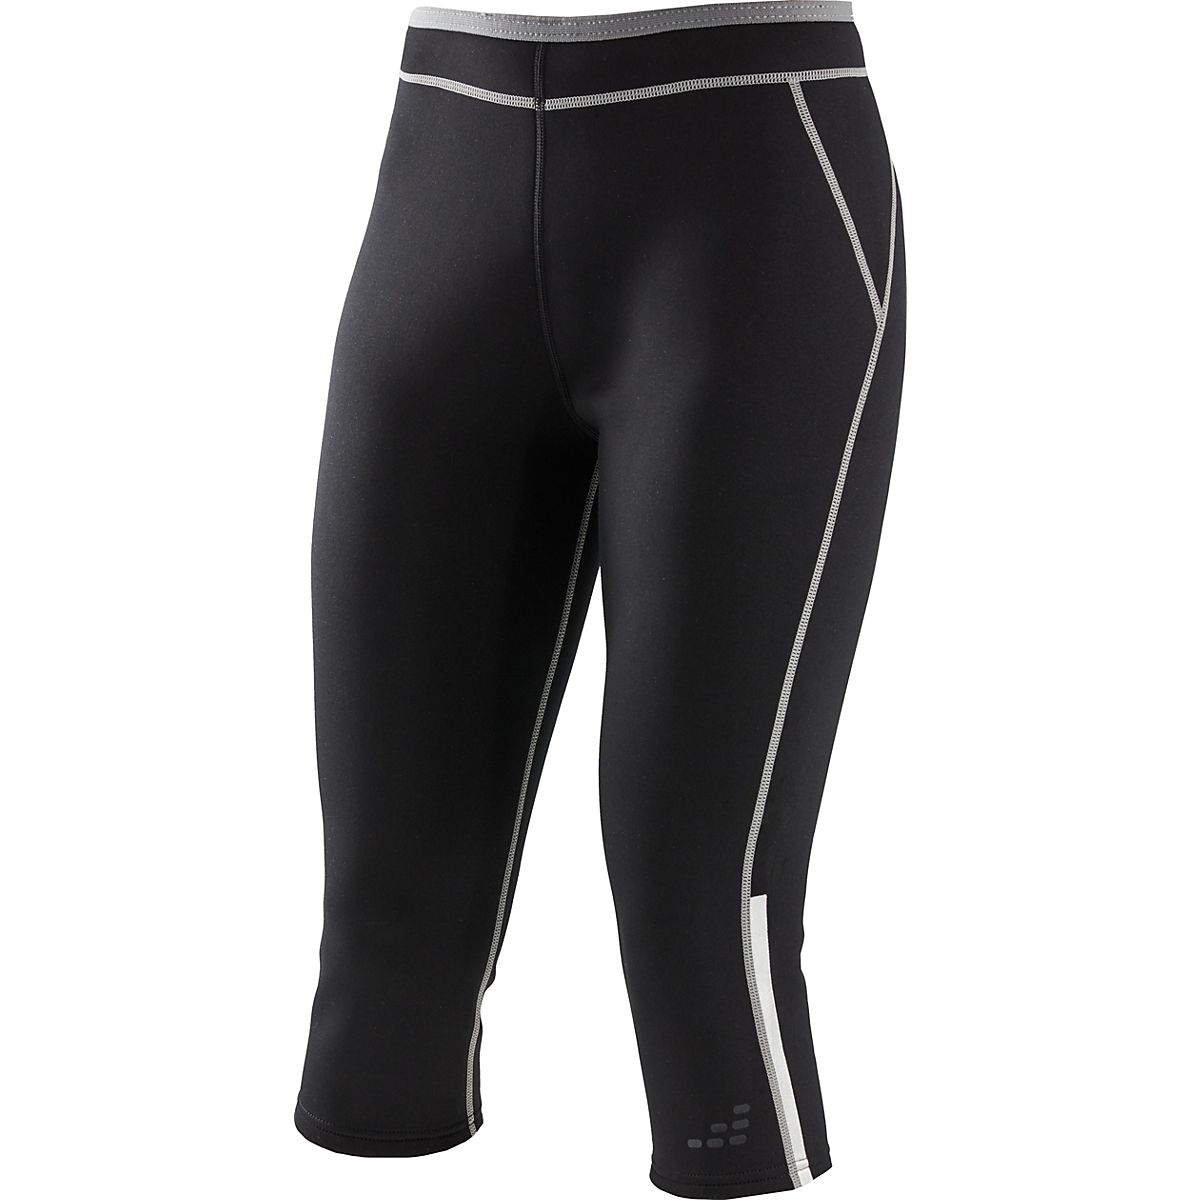 BCG Leggings Womens Large 12-14 Activewear Yoga Stretch Pants Black